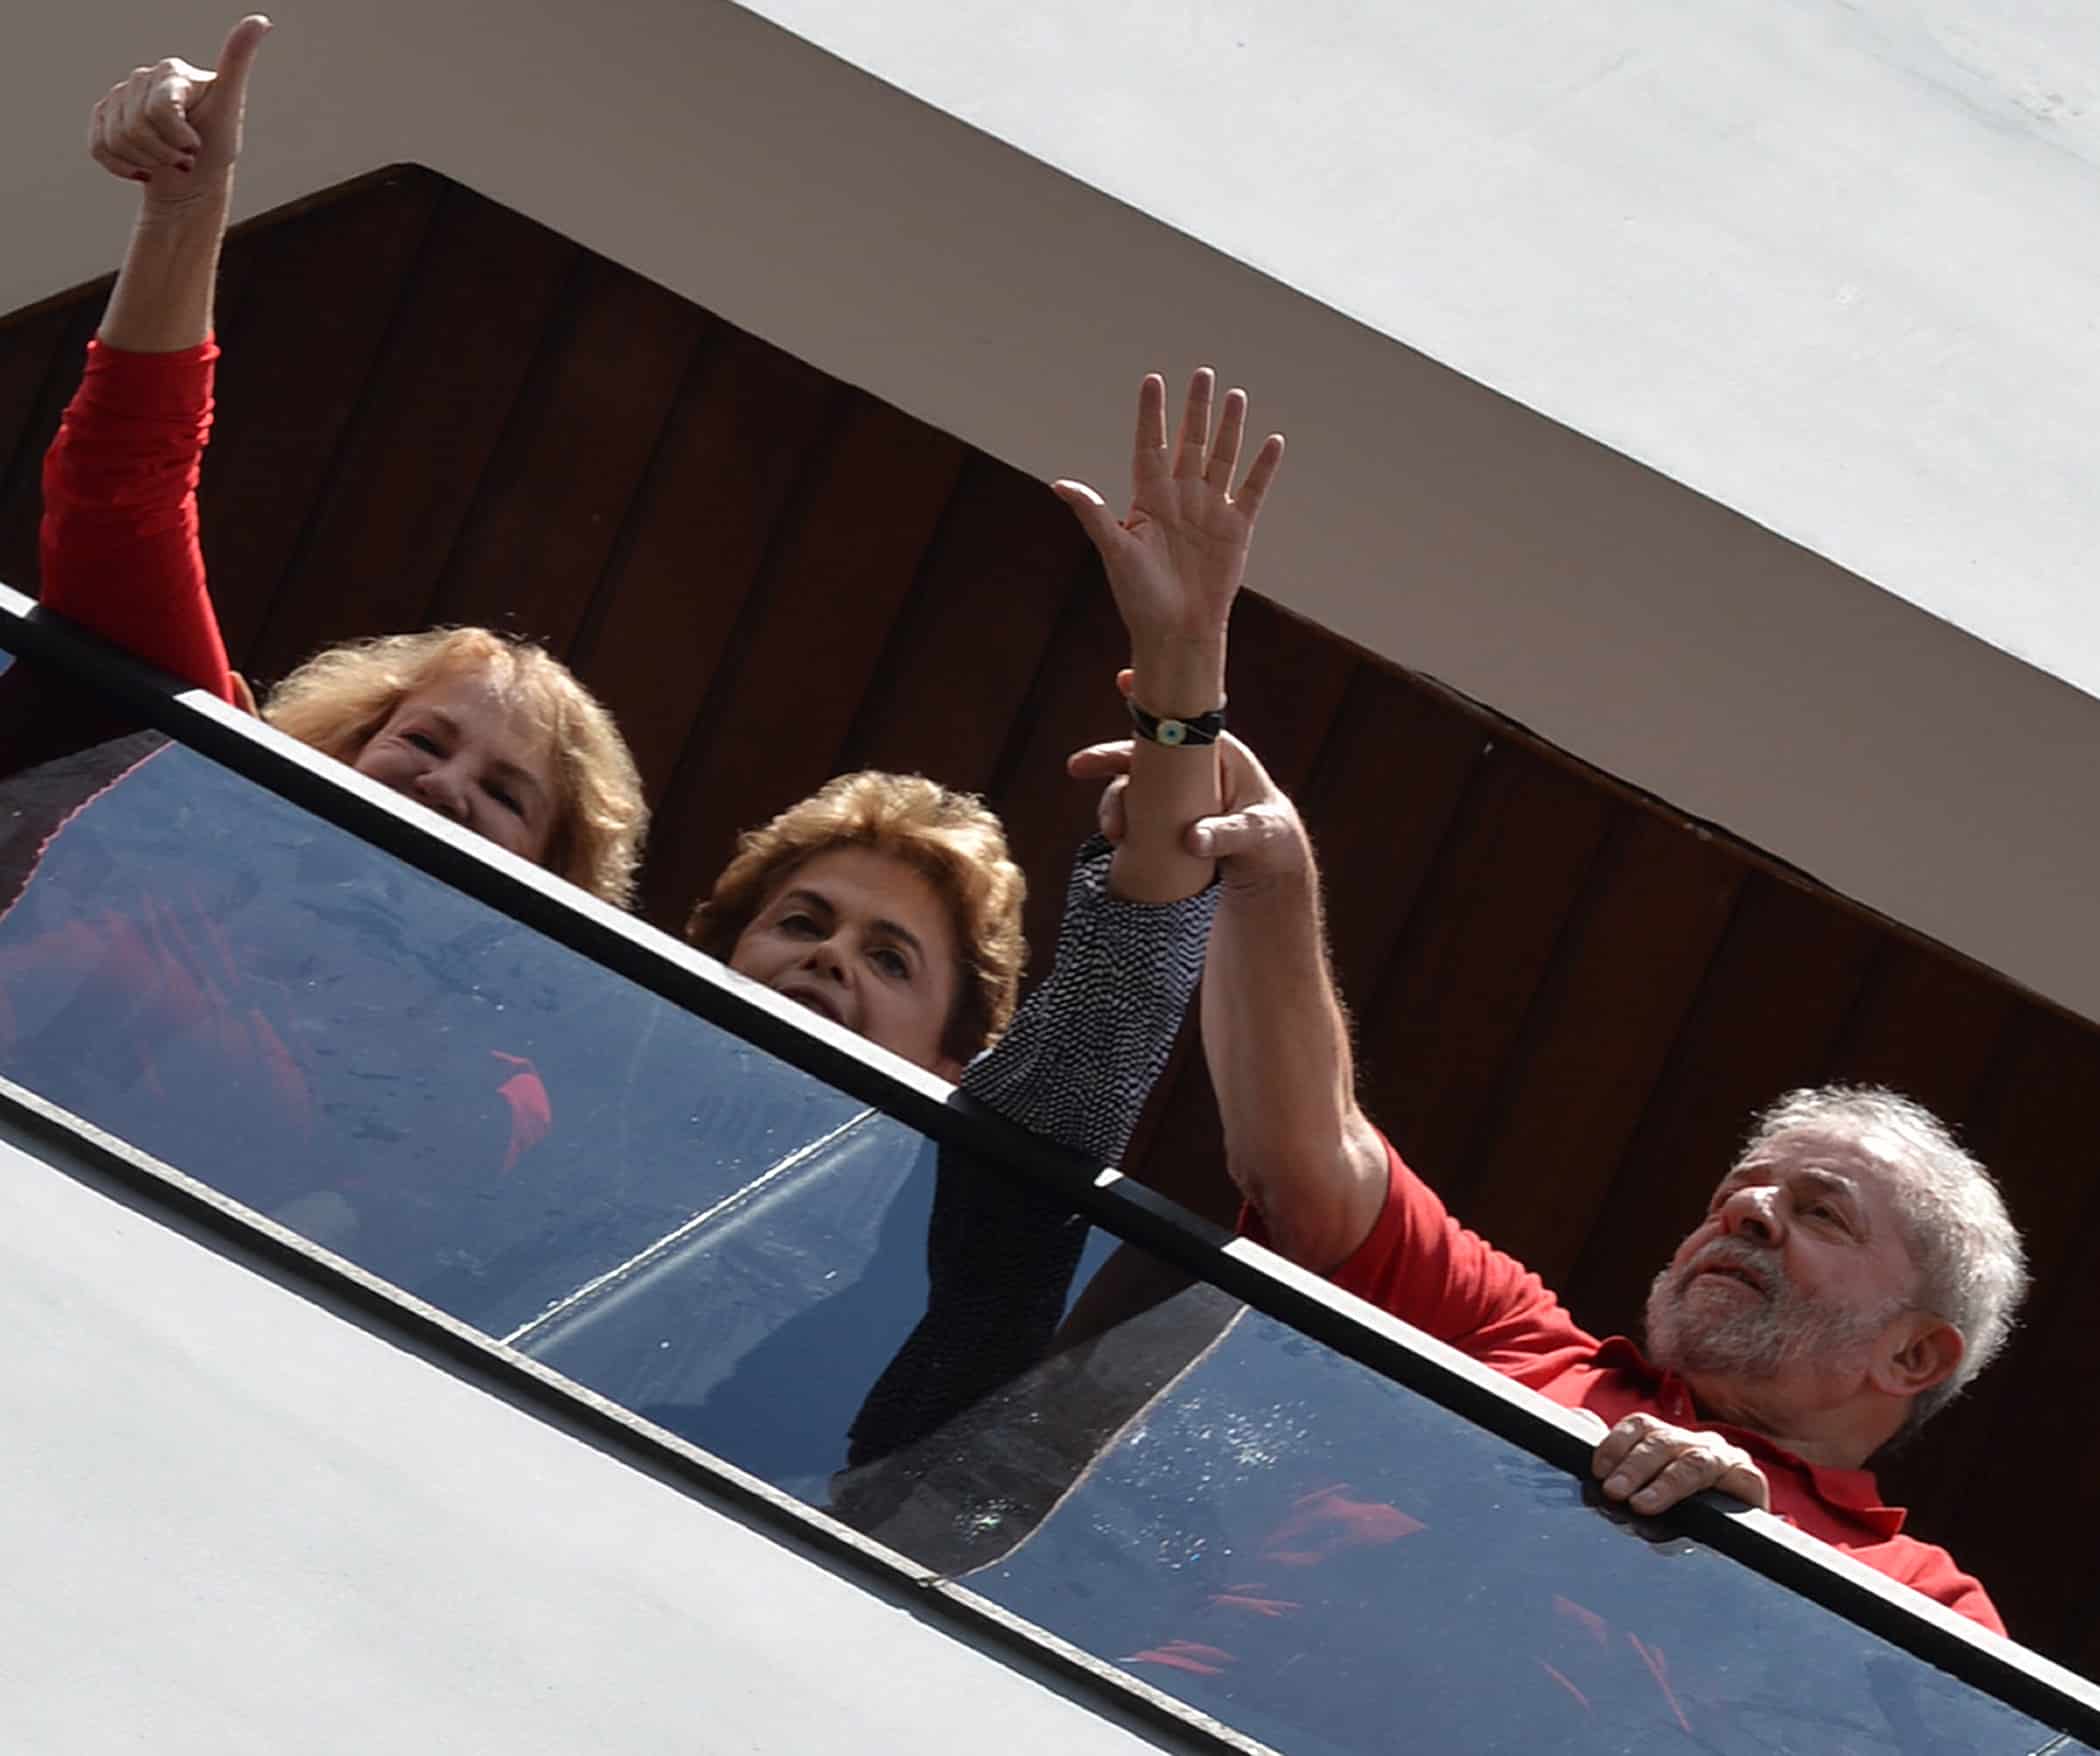 Former Brazilian President Luiz Inacio Lula da Silva, right, current President Dilma Rousseff, center, and Lula's wife Marisa Leticia